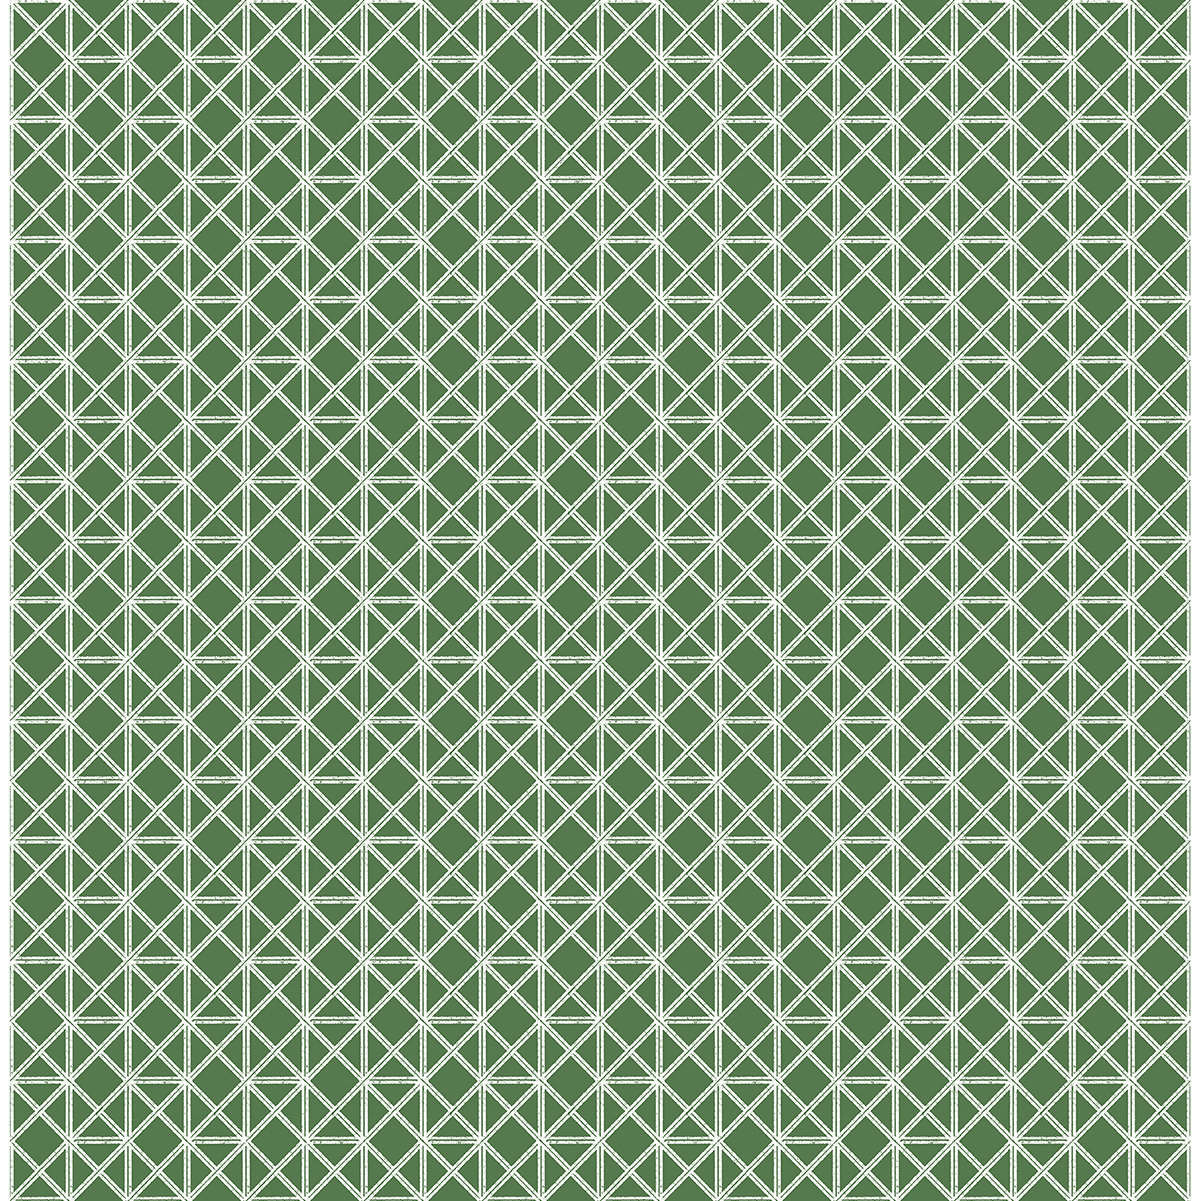 2969-26001 - Lisbeth Green Geometric Lattice Wallpaper - by A-Street Prints